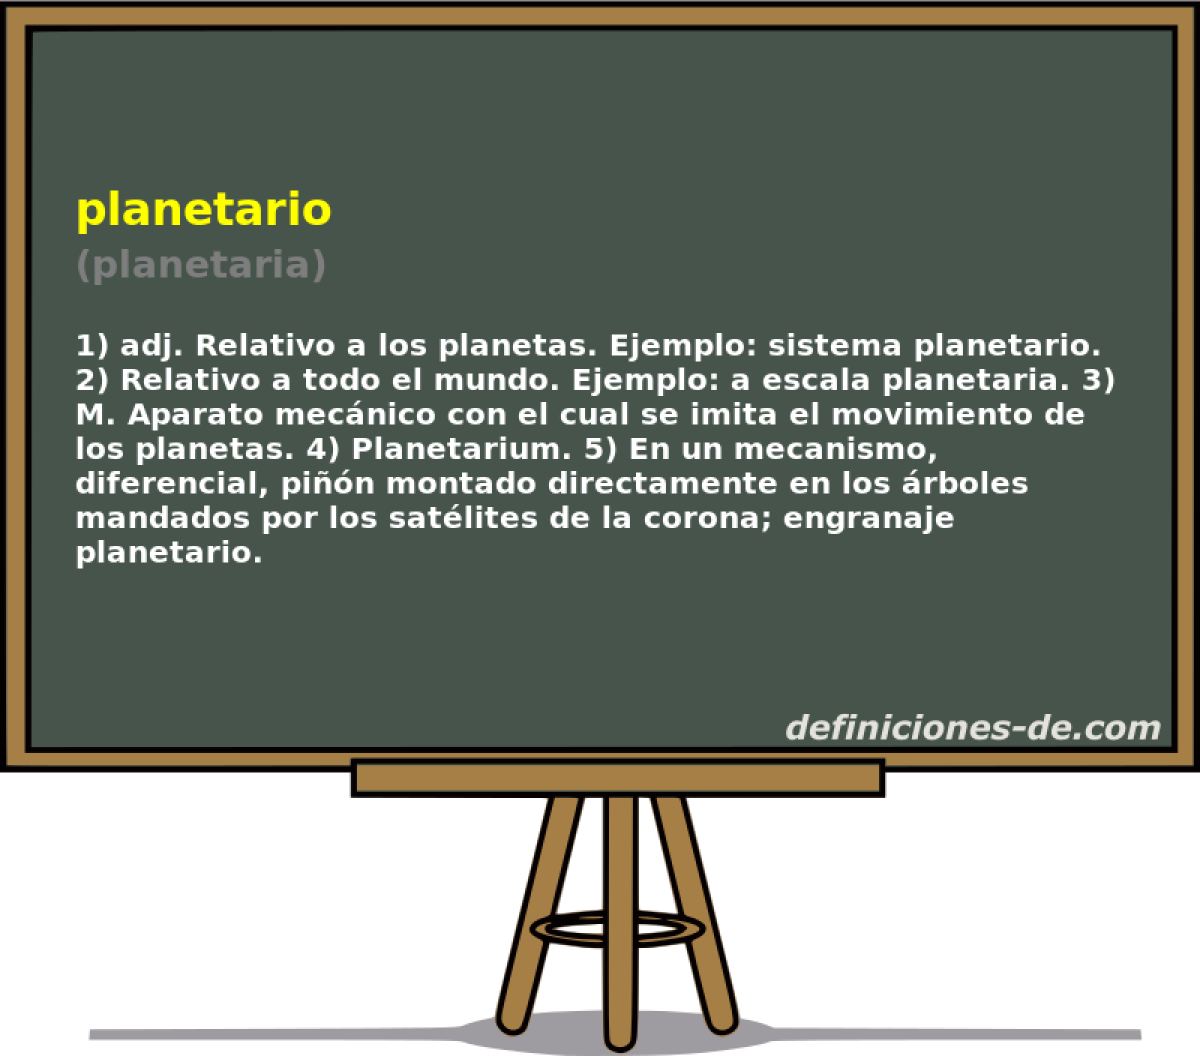 planetario (planetaria)